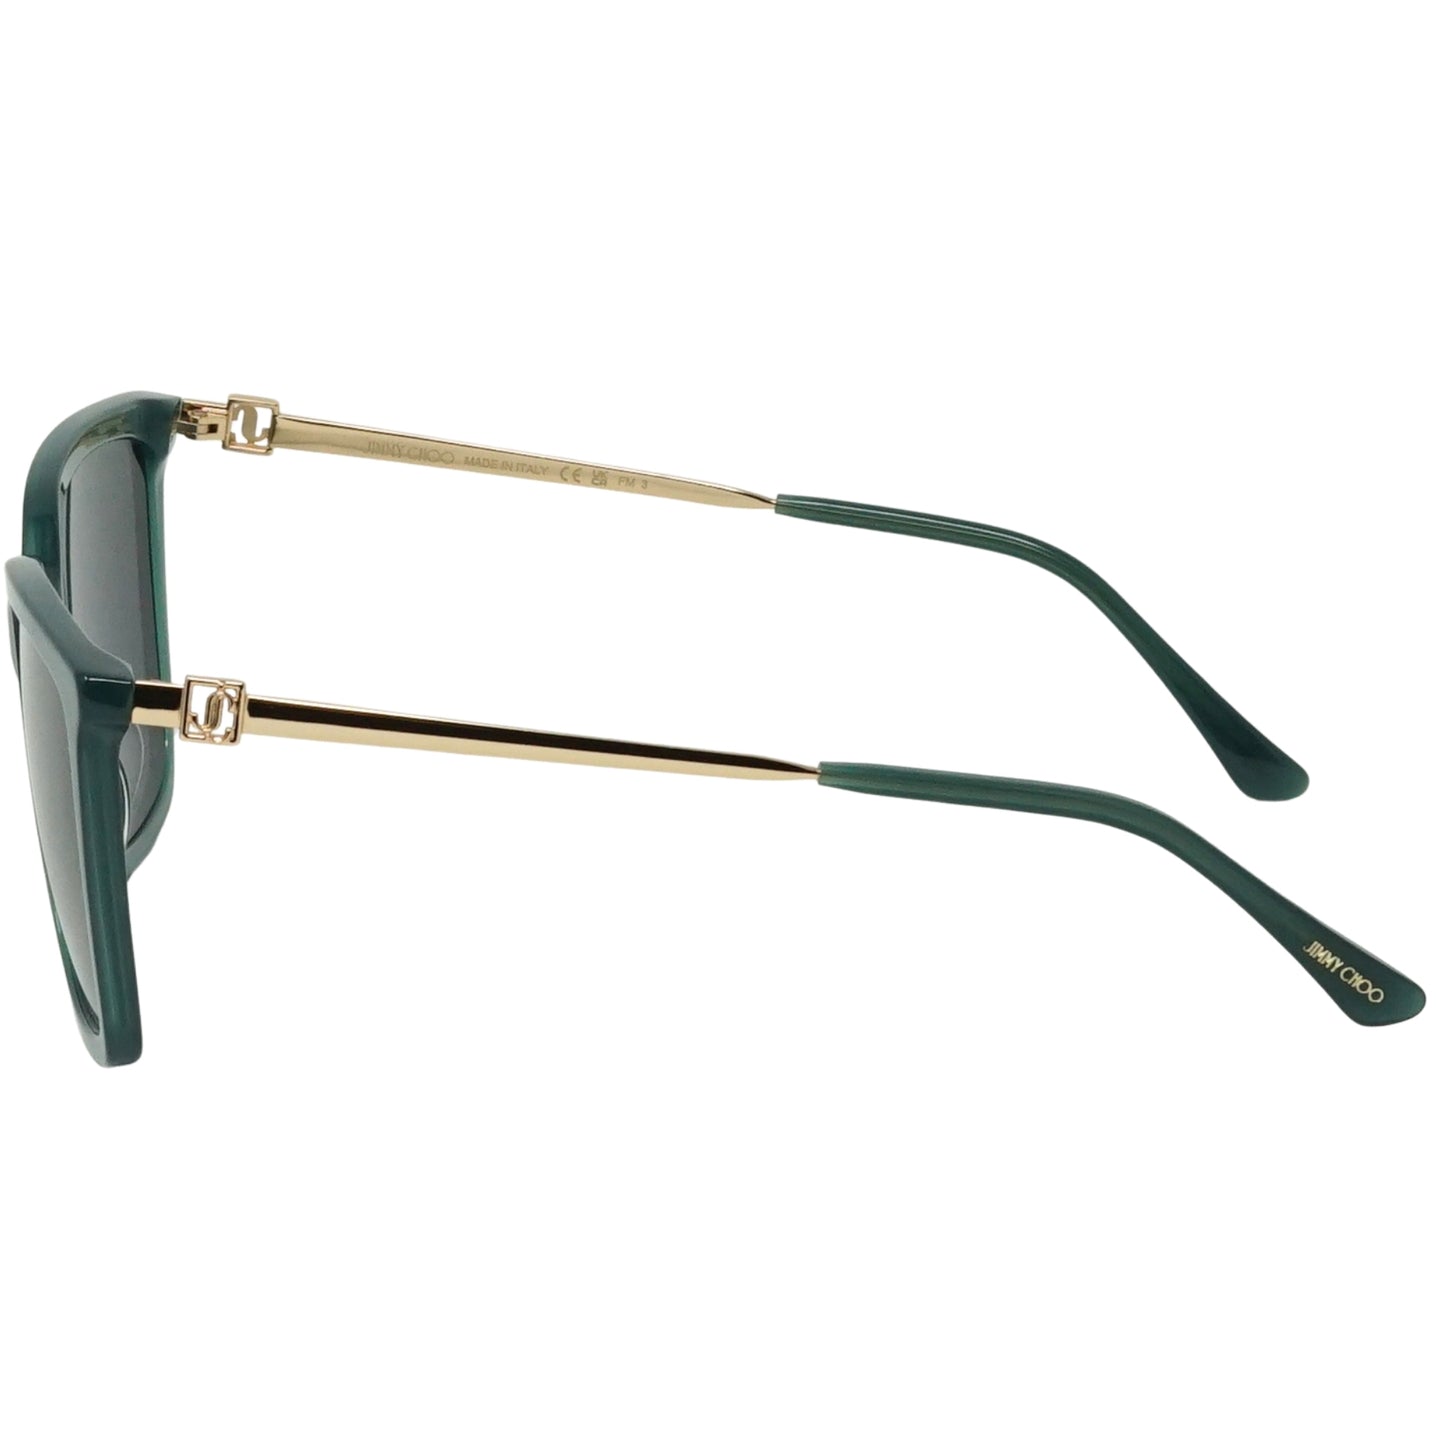 Jimmy Choo Totta/G/S 1ED Green Sunglasses